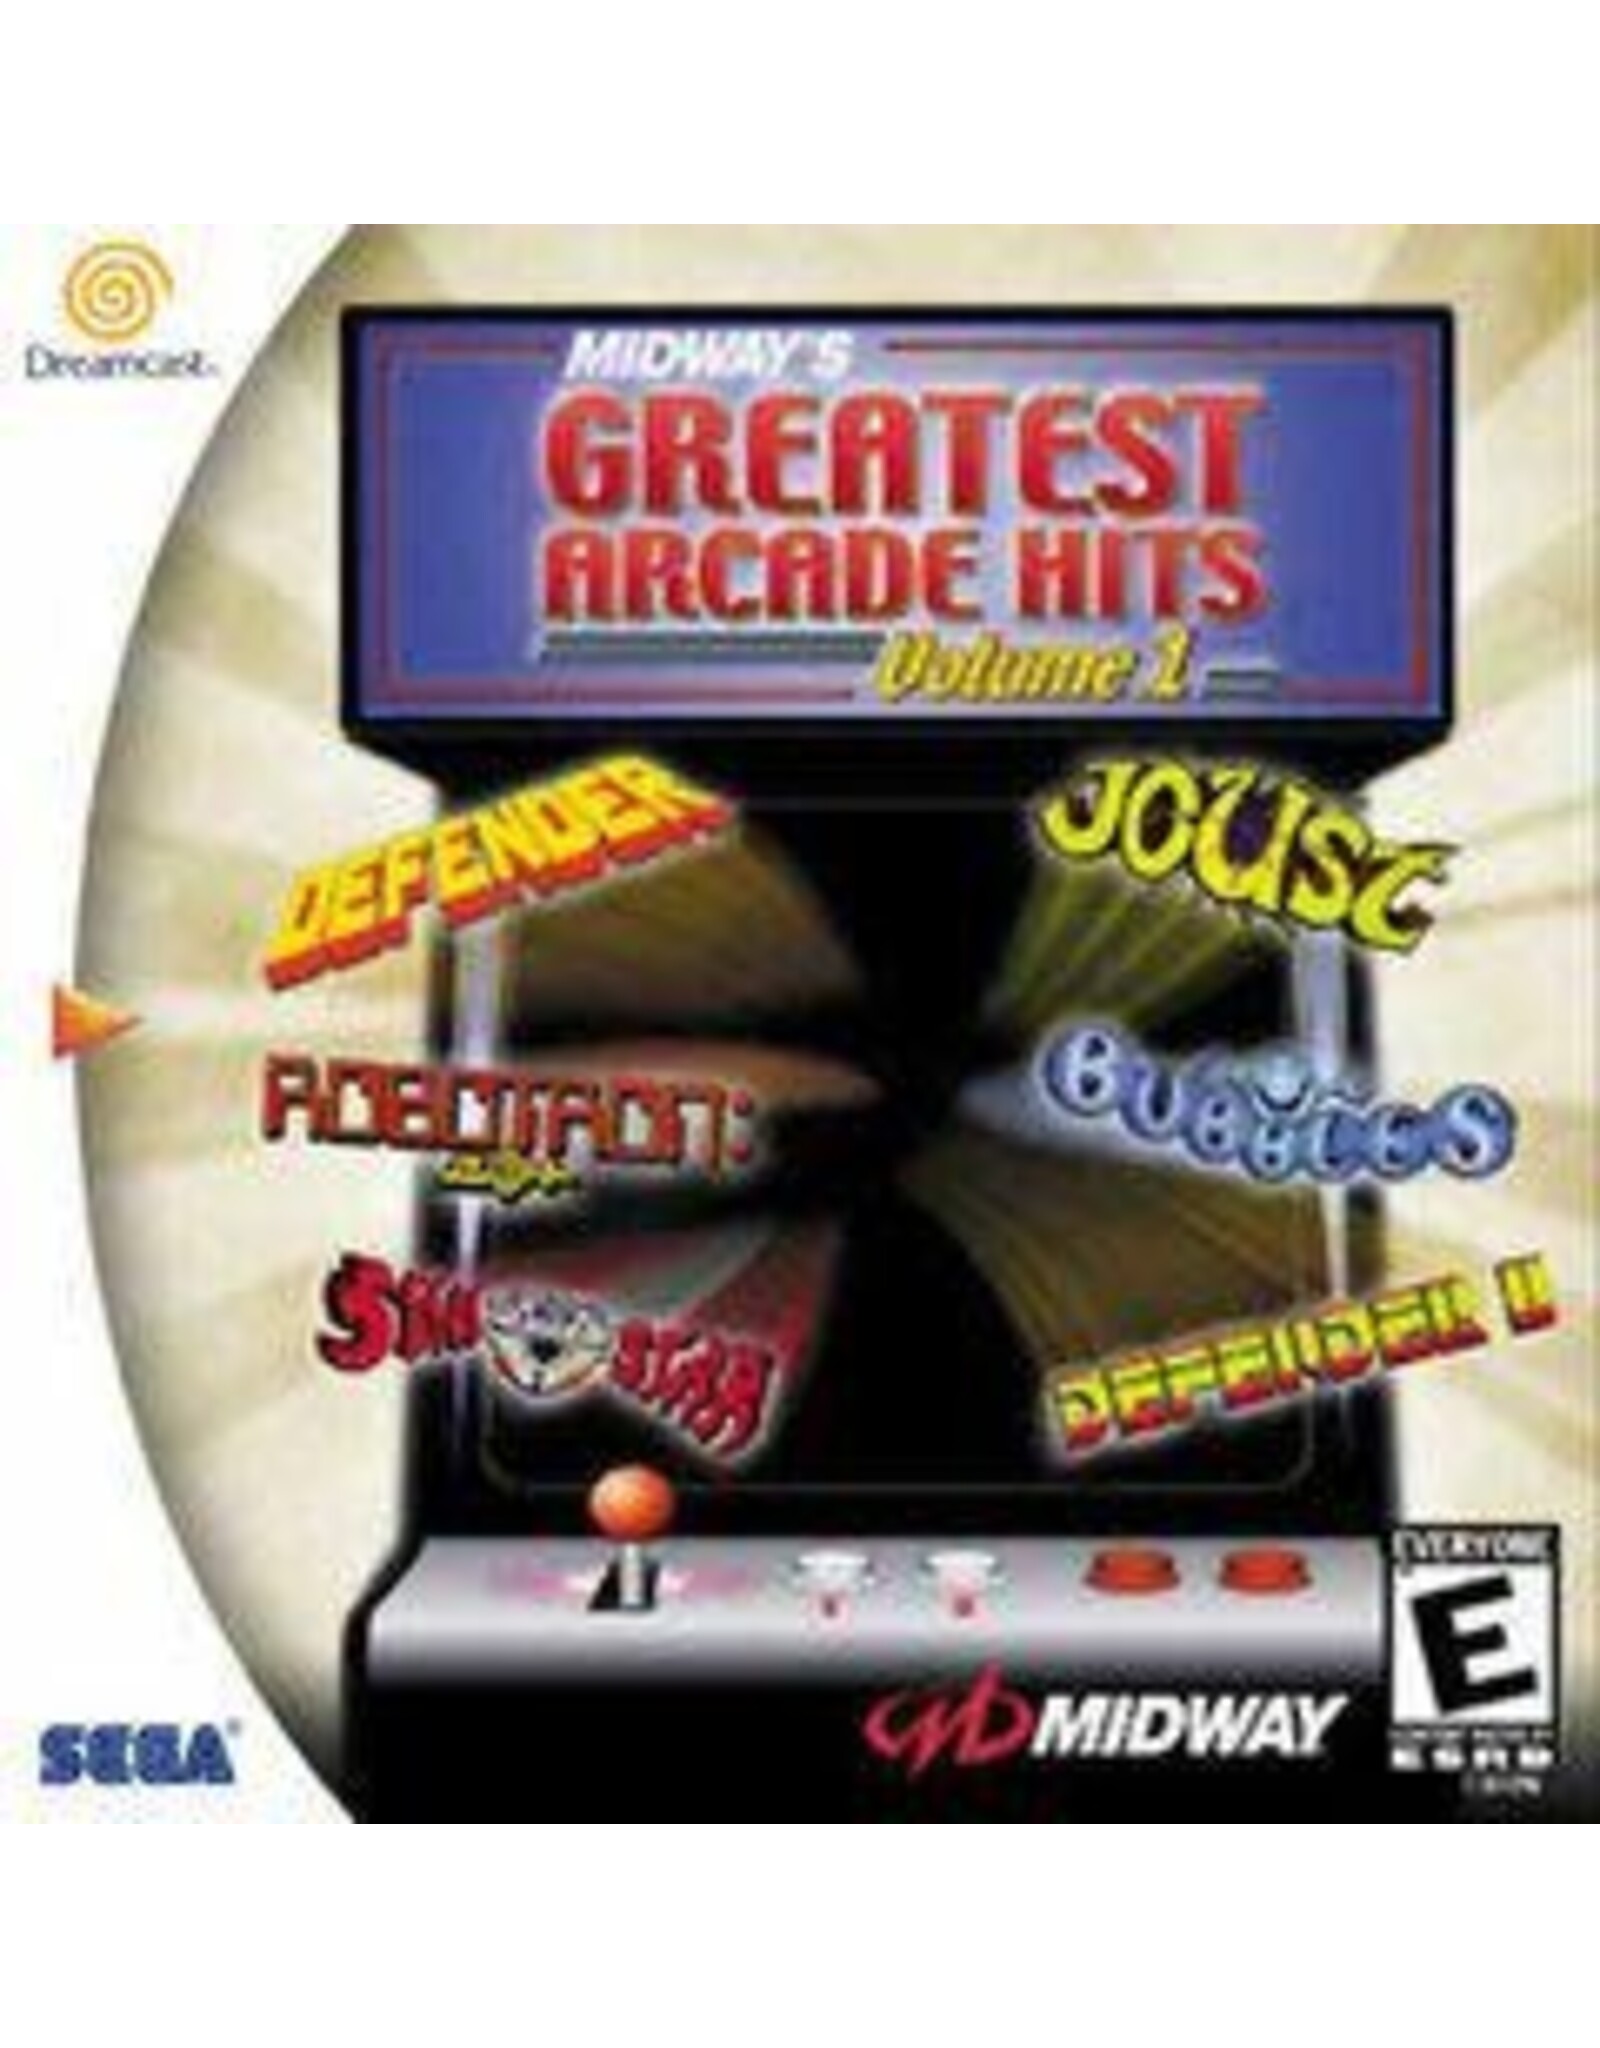 Sega Dreamcast Midway's Greatest Arcade Hits Volume I (CiB)